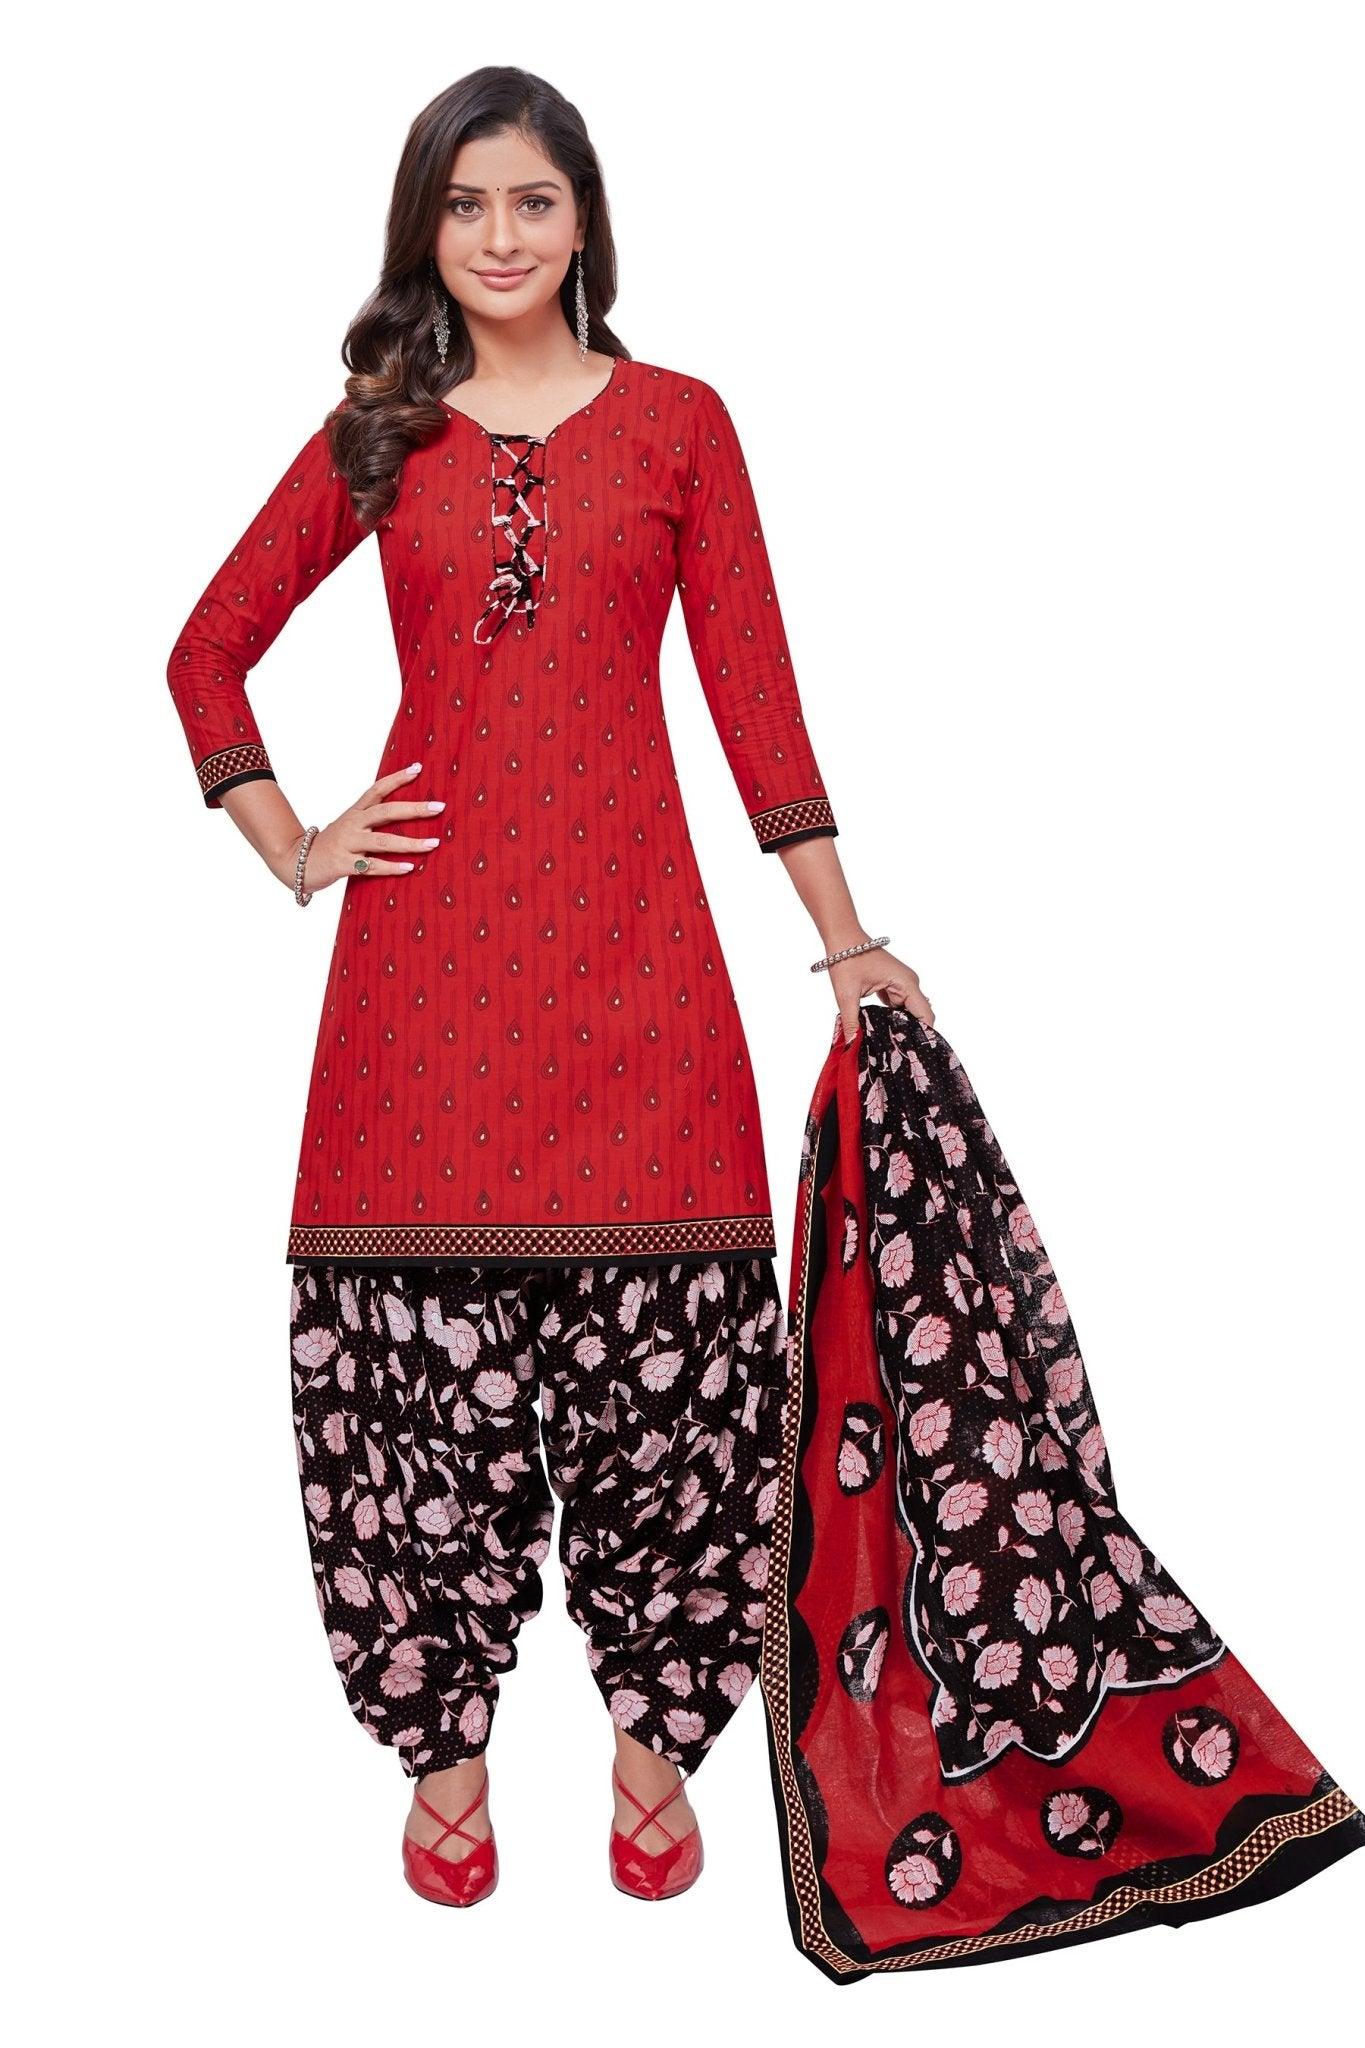 Cherry Red Top with Smoky Black Bottom and Dupatta. Safe to Skin Cotton Patiyala Dress - Bavis Clothing